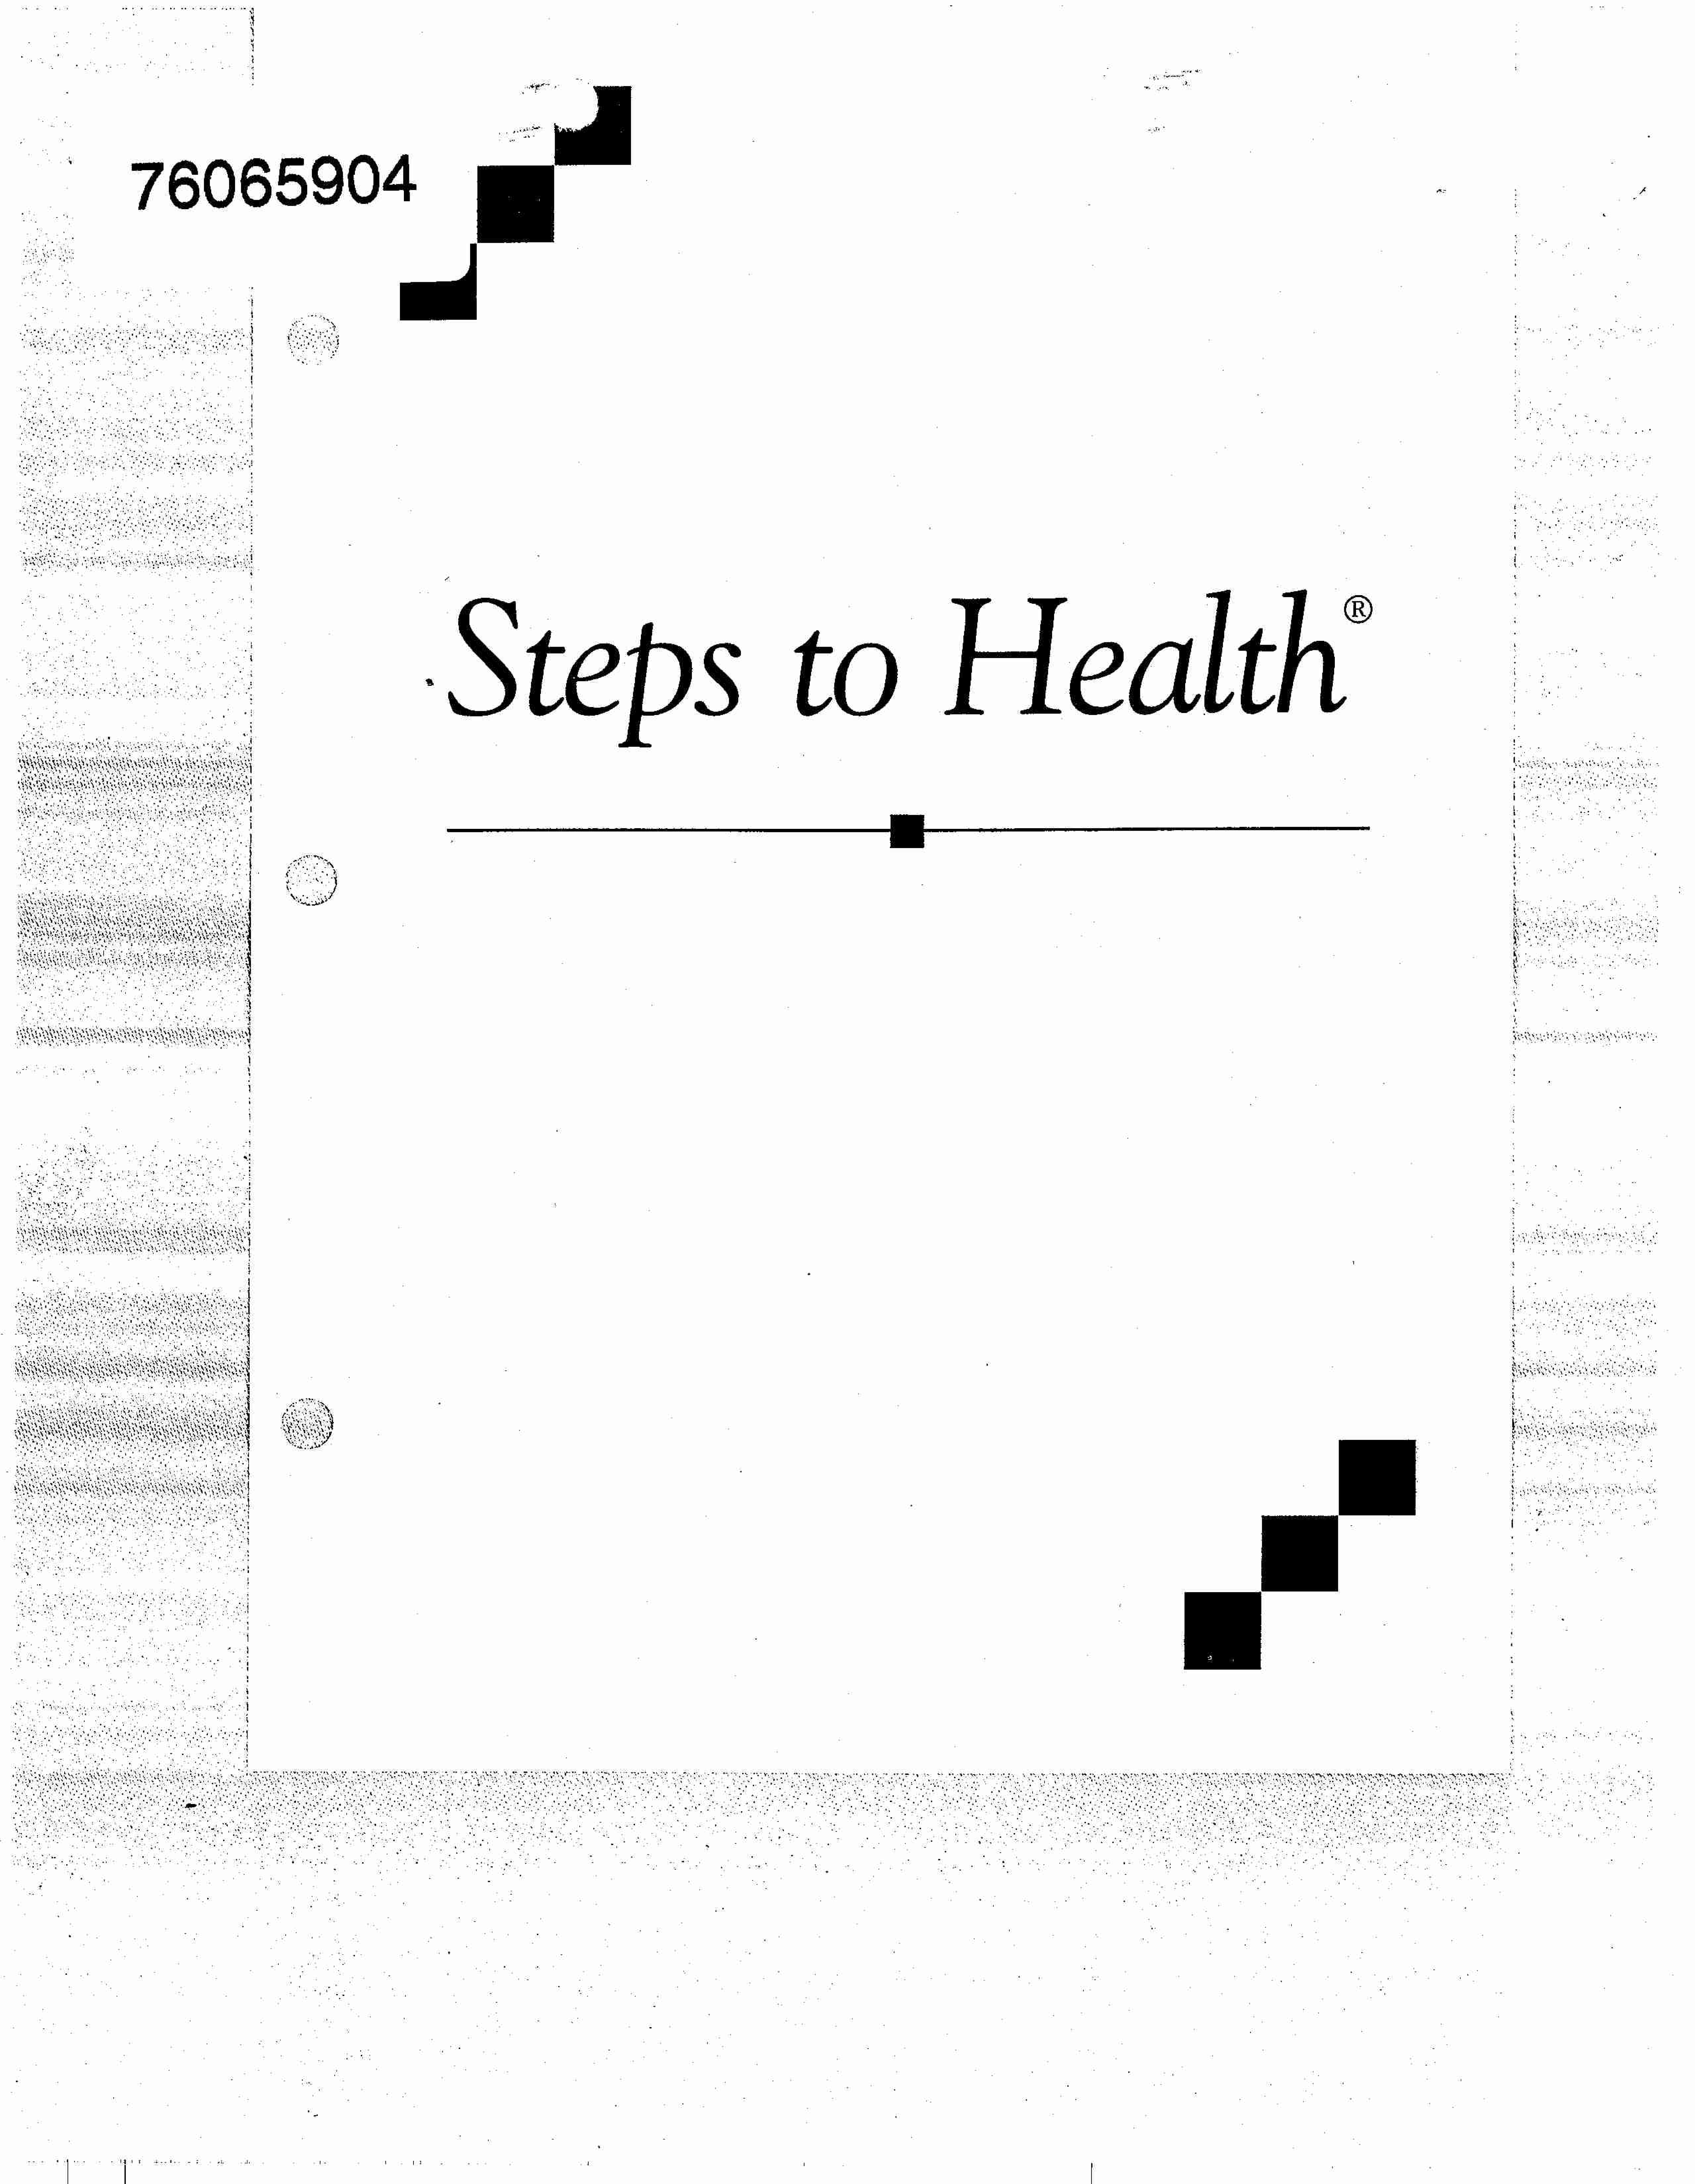  STEPS TO HEALTH